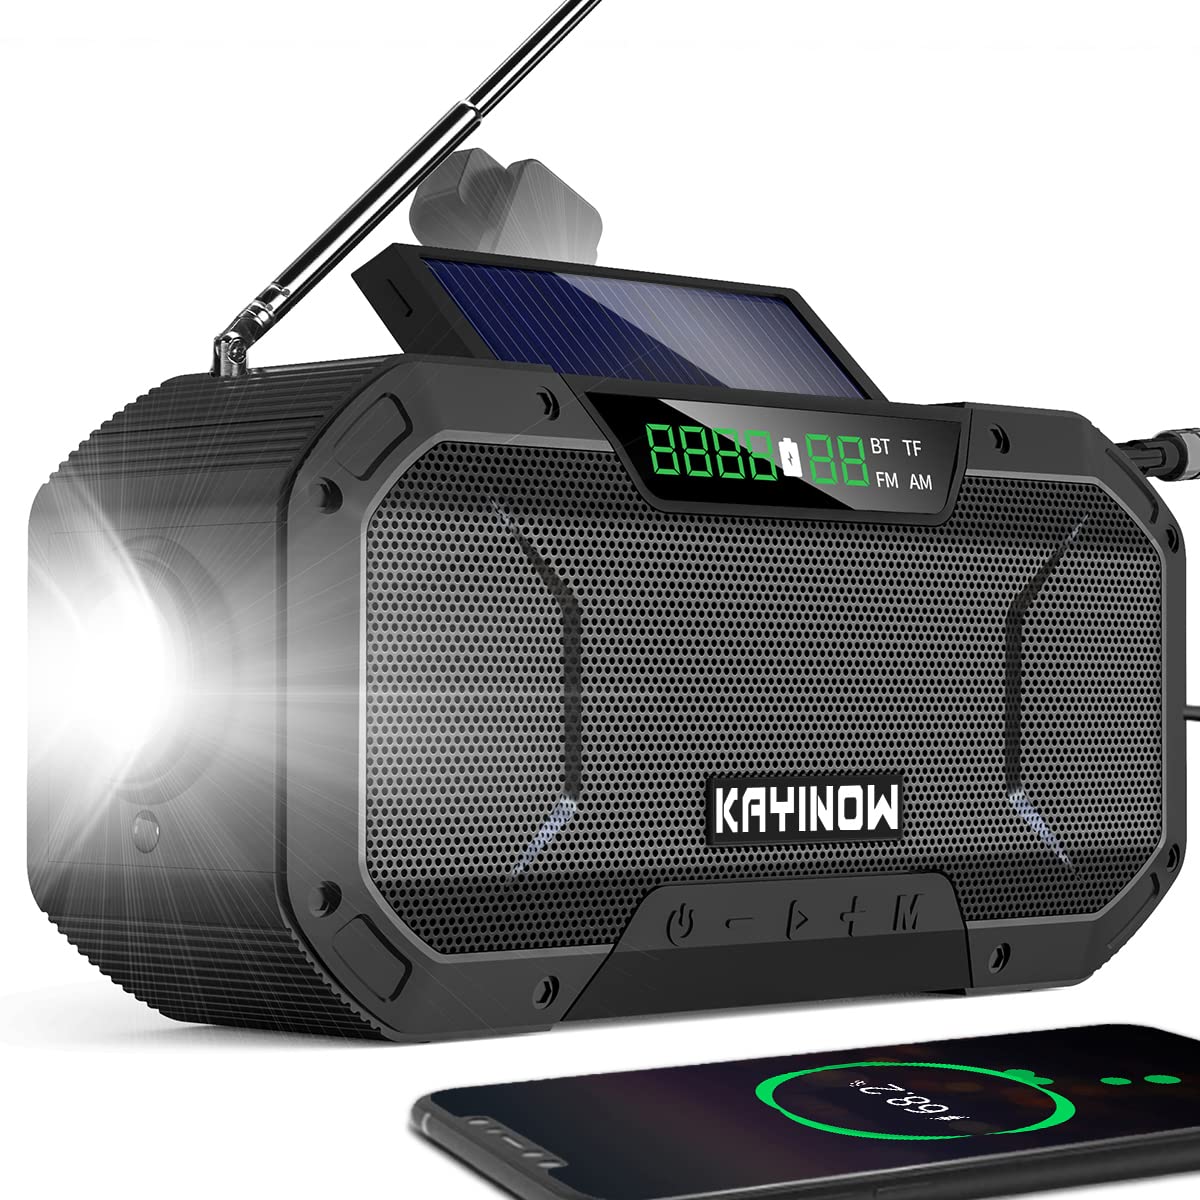 KAYINUO JIAYINNUOXIN Portable Digital AM FM Radio Waterproof Bluetooth Speaker,Hand crank Solar Emergency Radio,5000mAH cell Phone charger,NOAA Weath